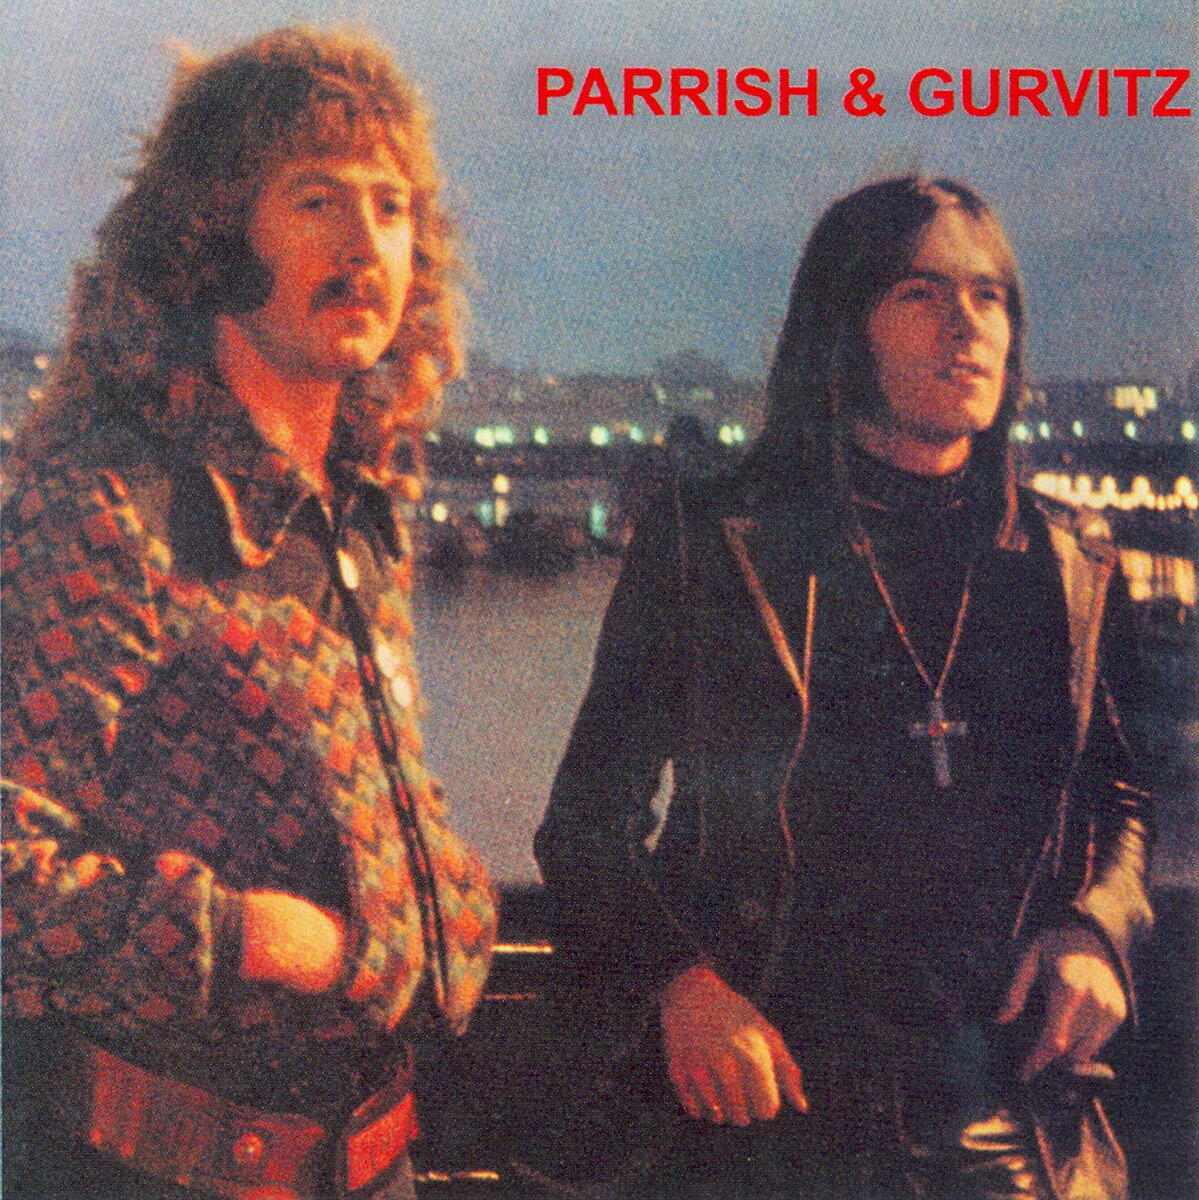 Press gurvitz. Parrish Gurvitz the Parrish Gurvitz Band 1971. Parrish & Gurvitz. Adrian Gurvitz Parrish & Gurvitz. Press Gurvitz logo.